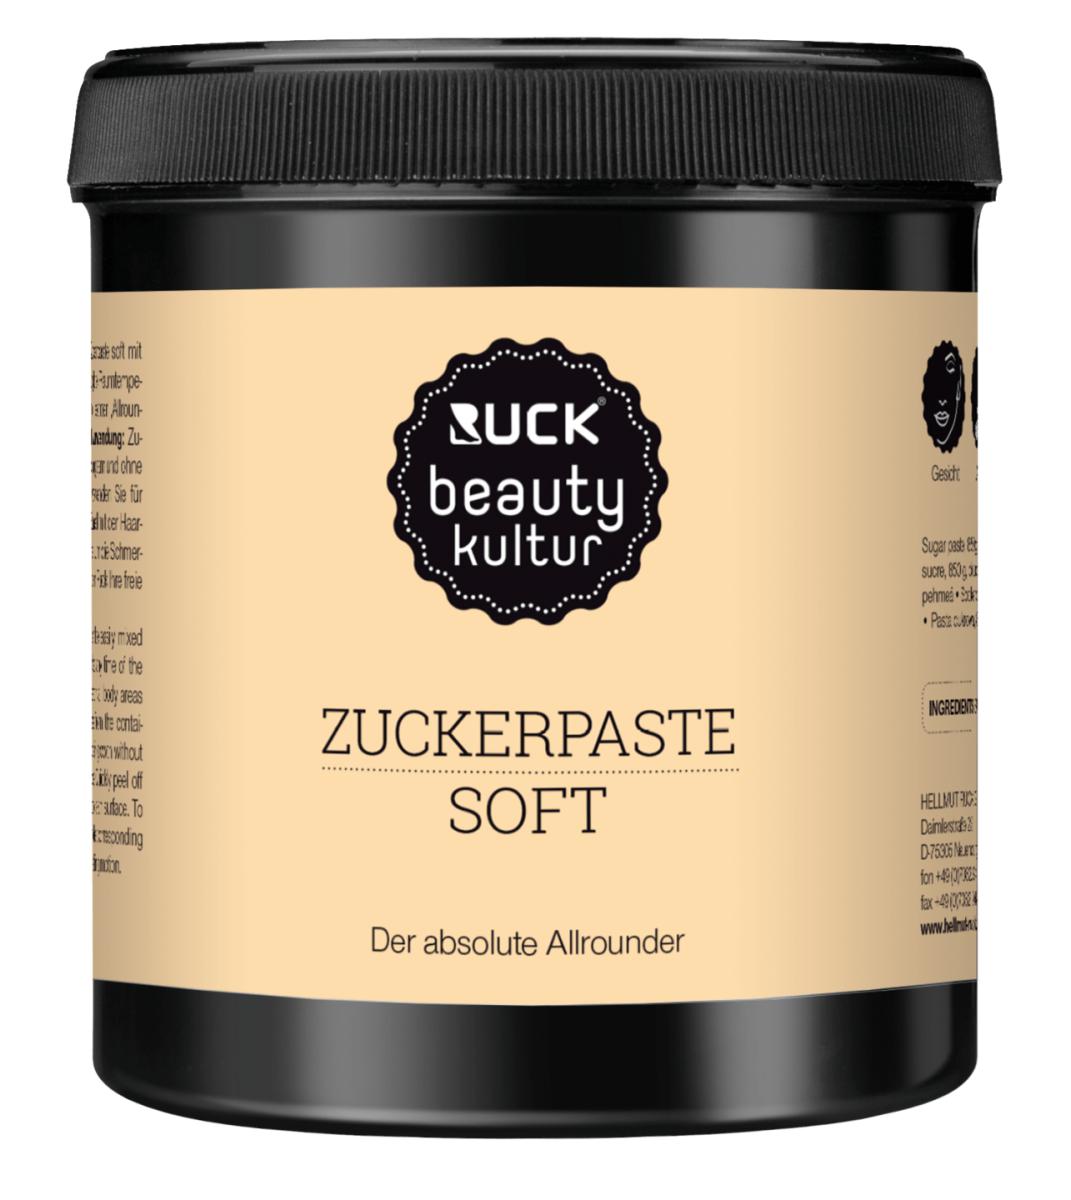 RUCK beautykultur Zuckerpaste super-soft | 850 g